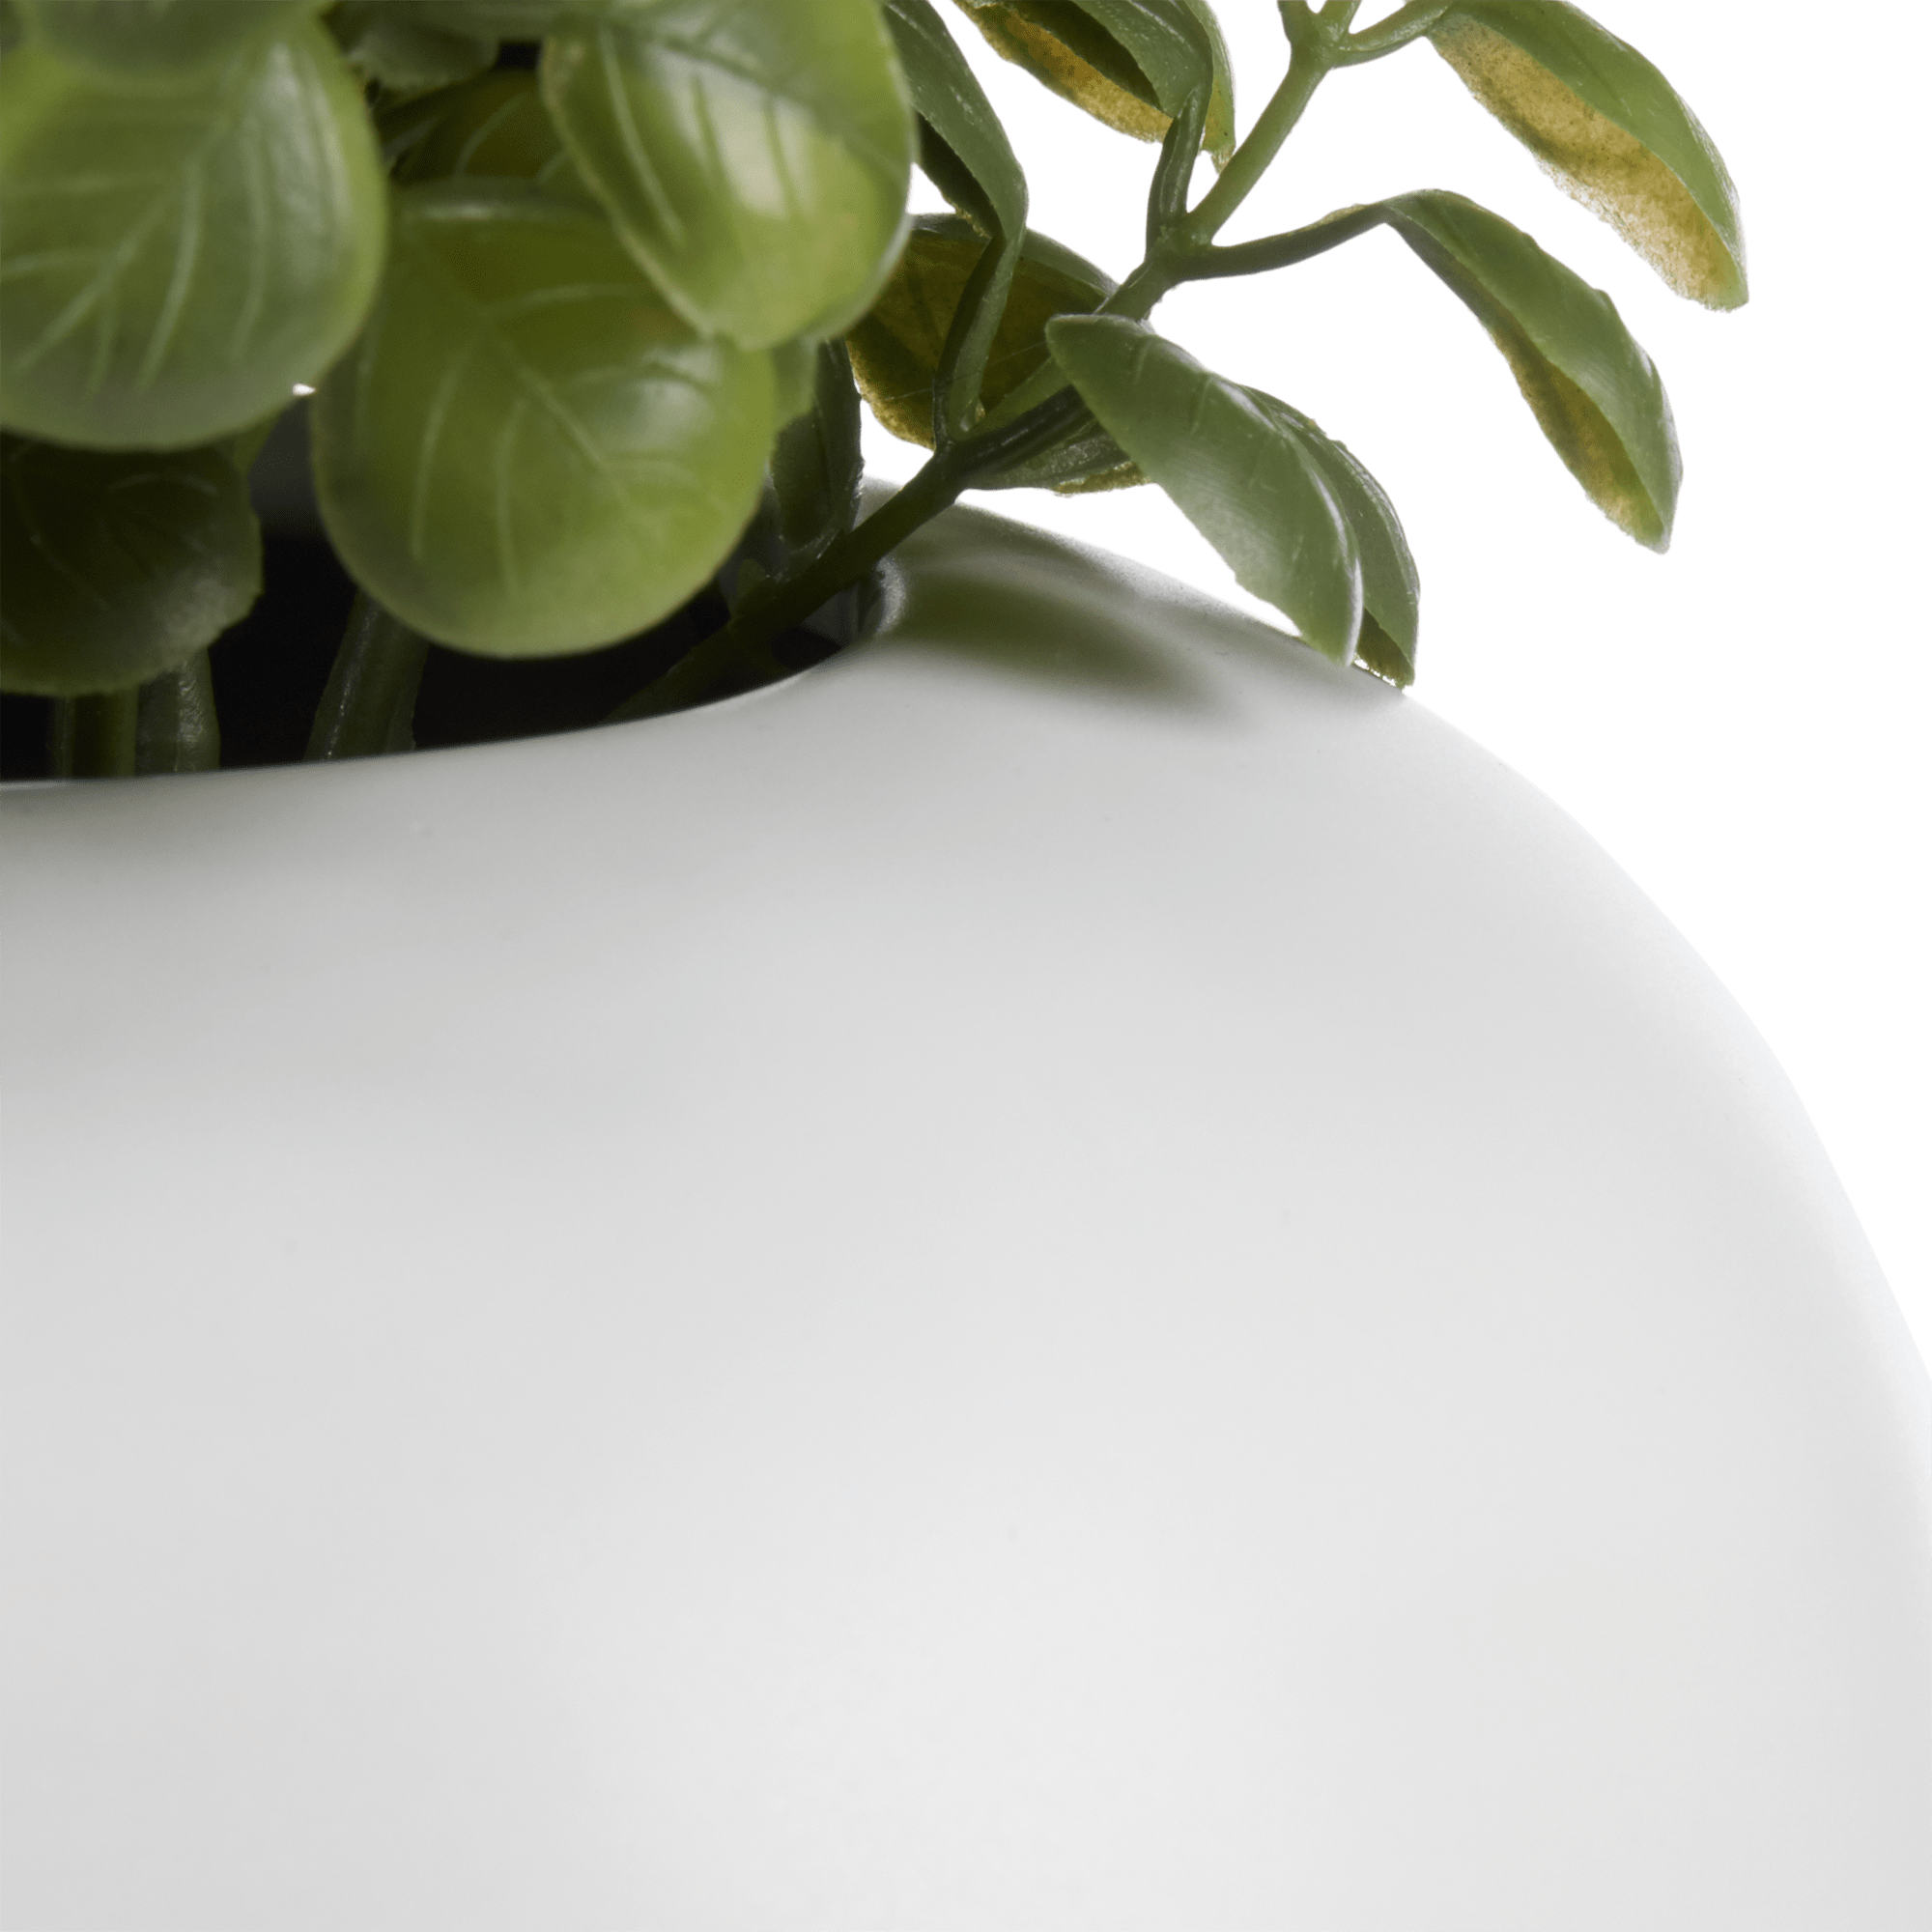 Artificial Eucalyptus in Round White Pot